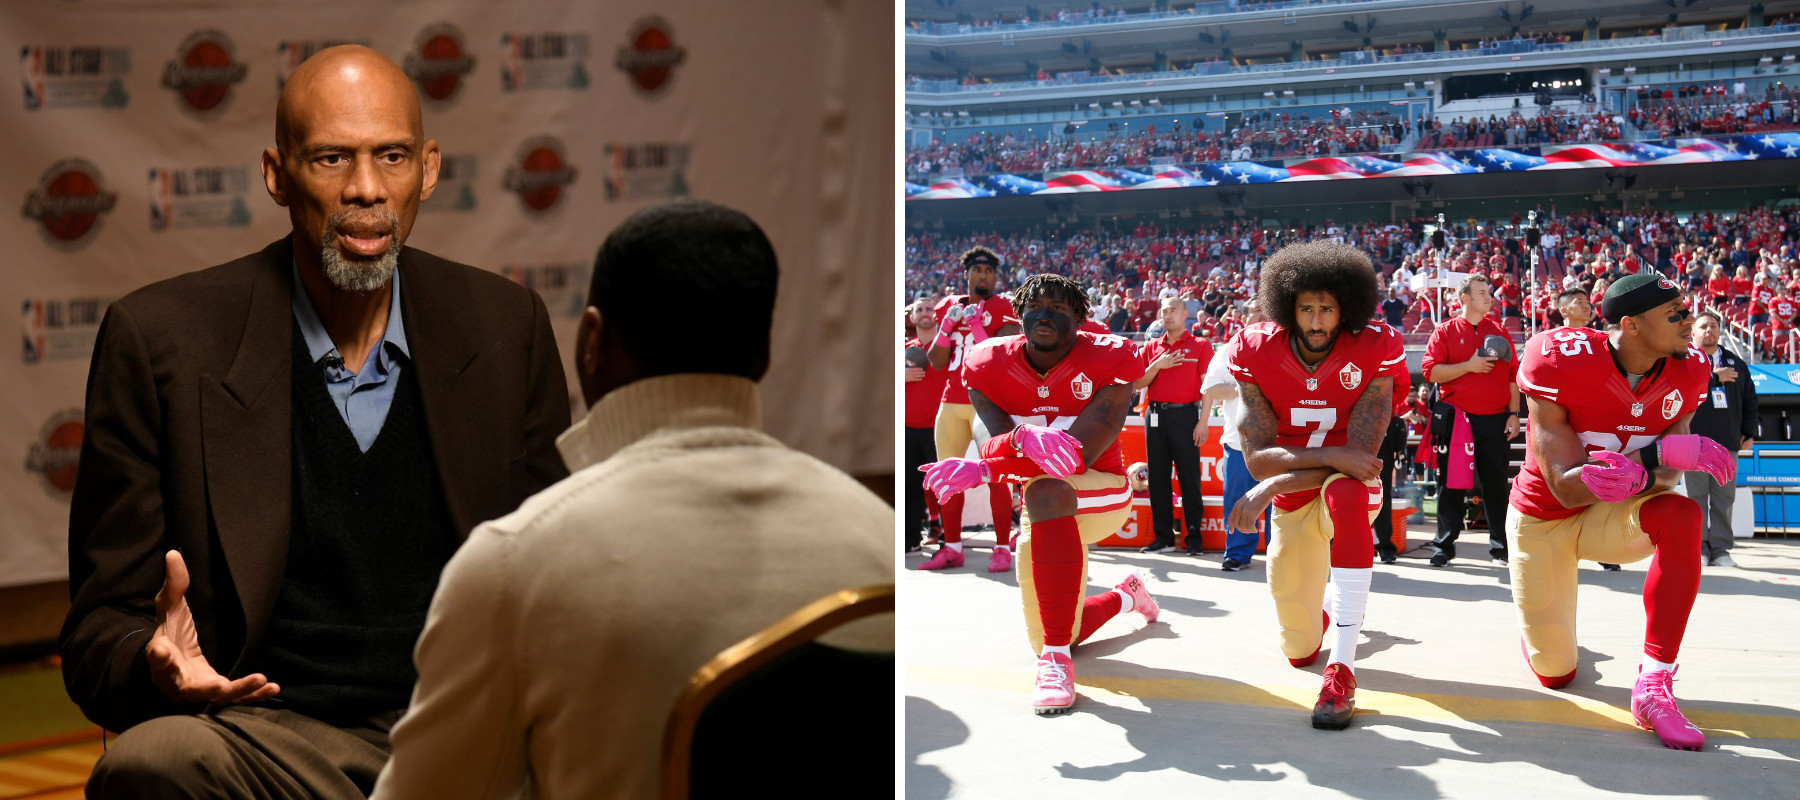 Kareem Abdul-Jabbar being interviewed at the NBRPA and Colin Kaepernick of the San Francisco 49ers kneeling